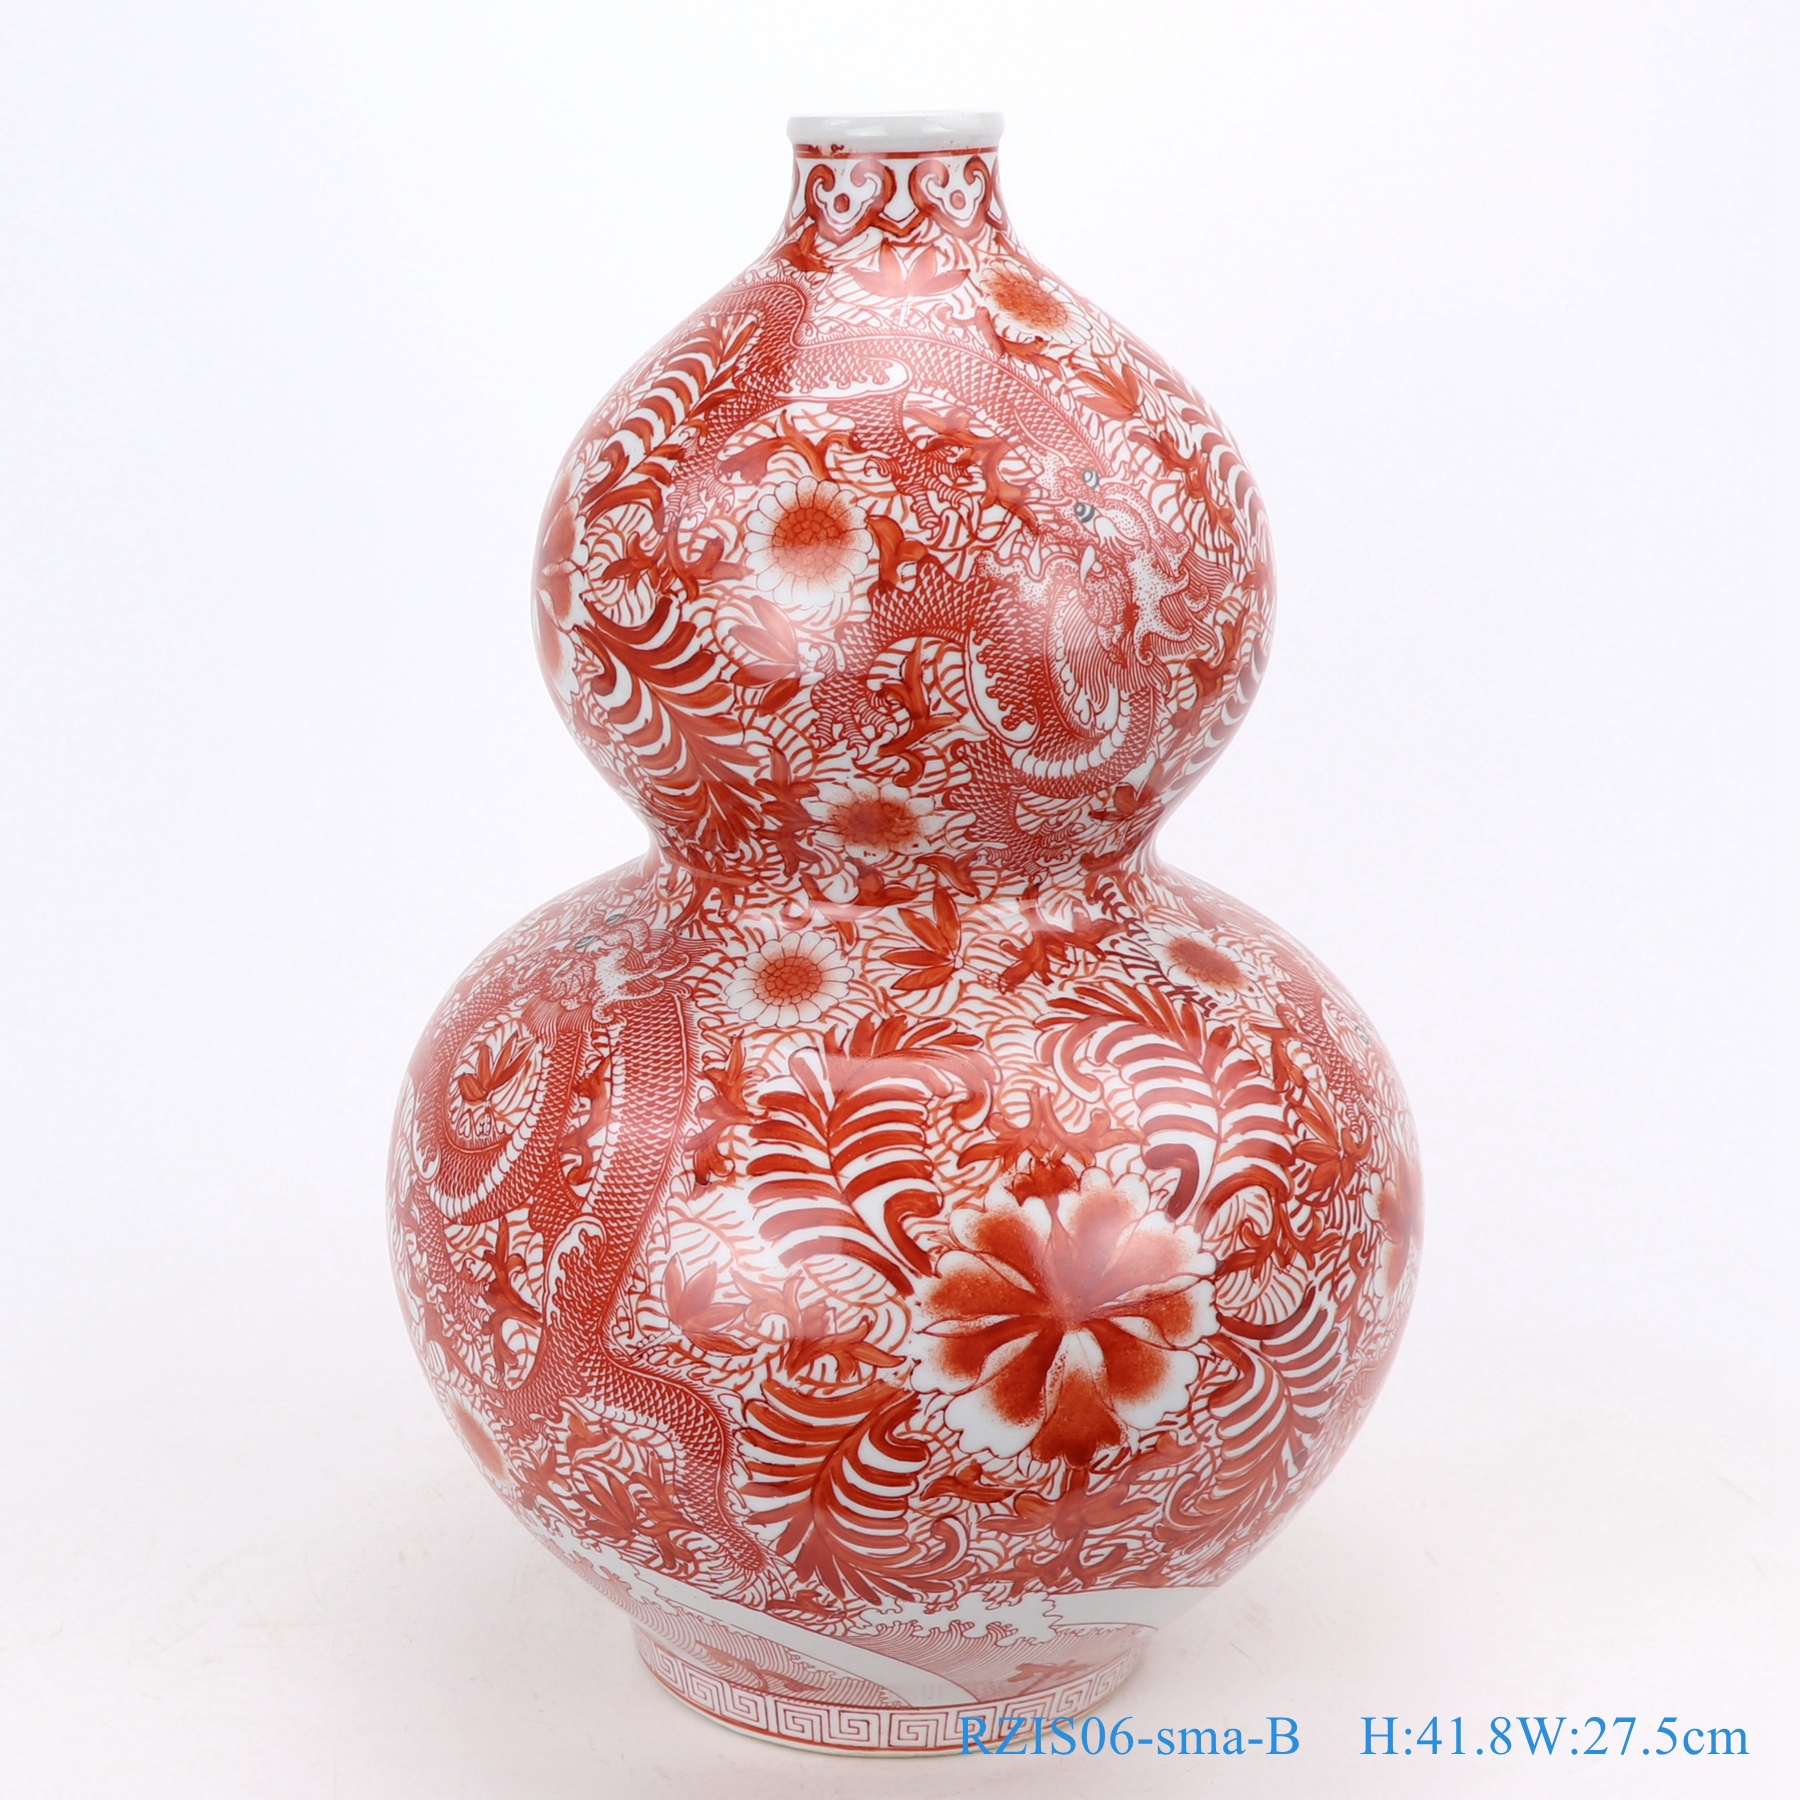 A Knowledge of pastel ceramics Chinese Ceramic Art——